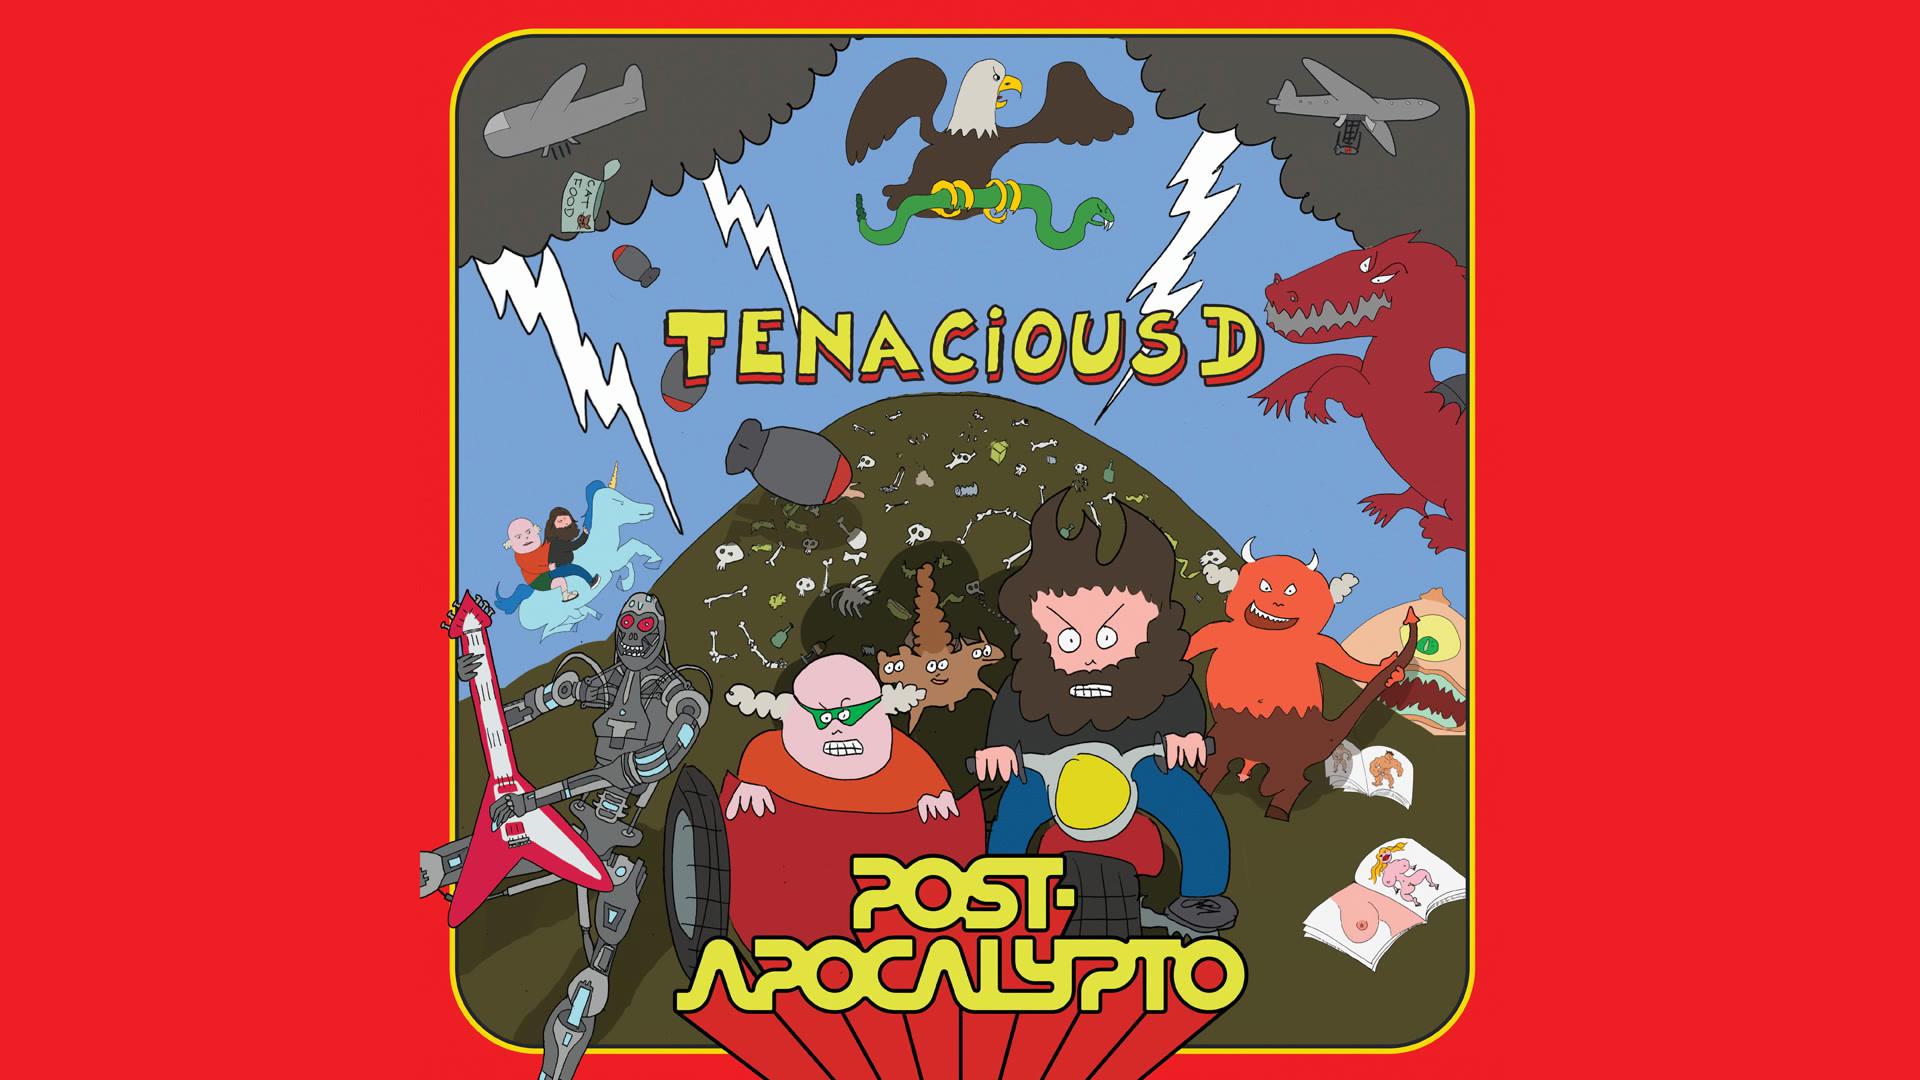 Tenacious D - SAVE THE WORLD (Official Audio)